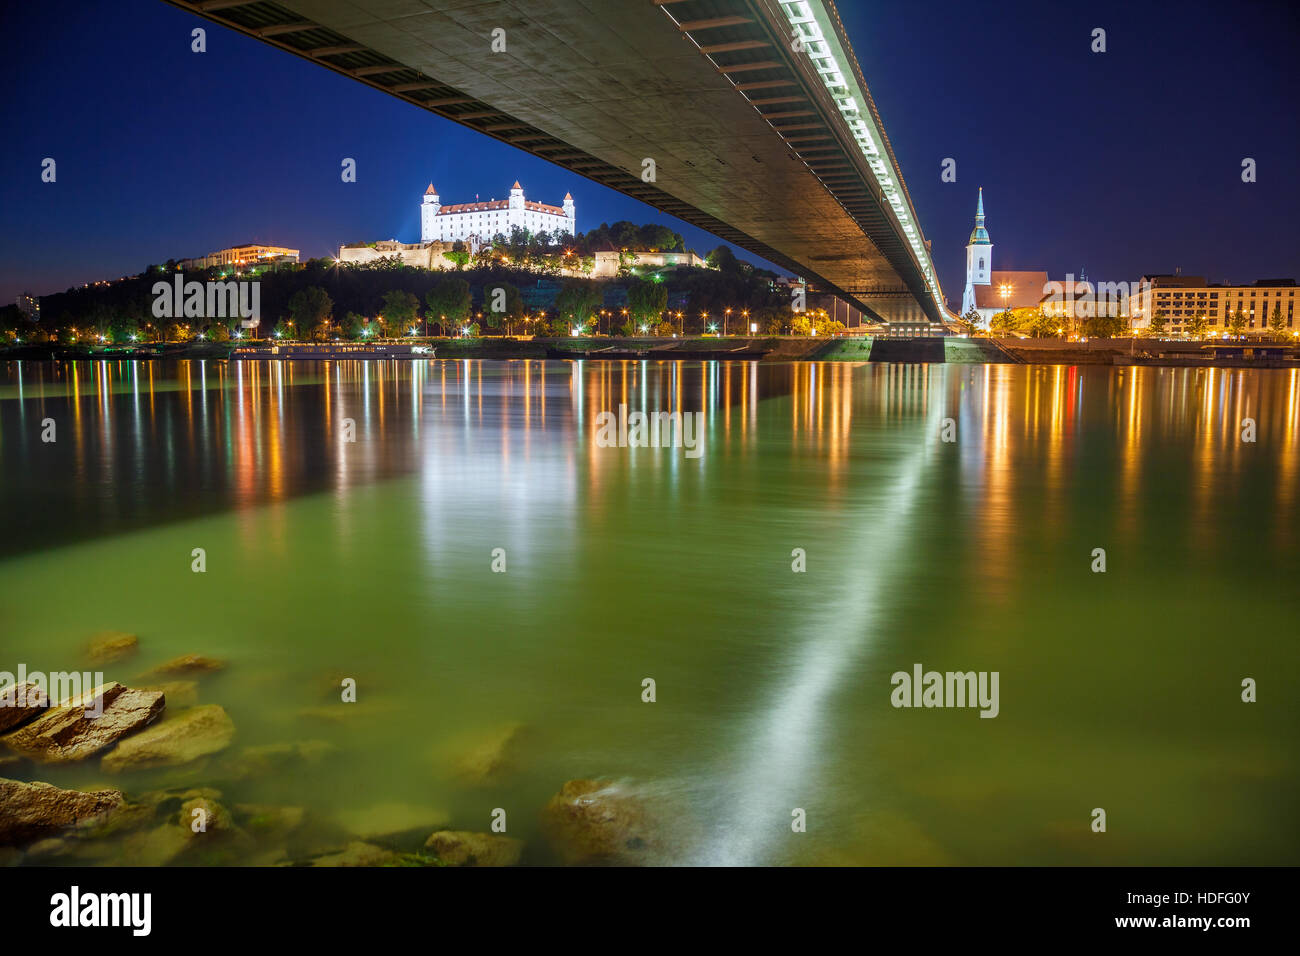 Bratislava, Slovakia. Cityscape image of Bratislava riverside at night. Stock Photo